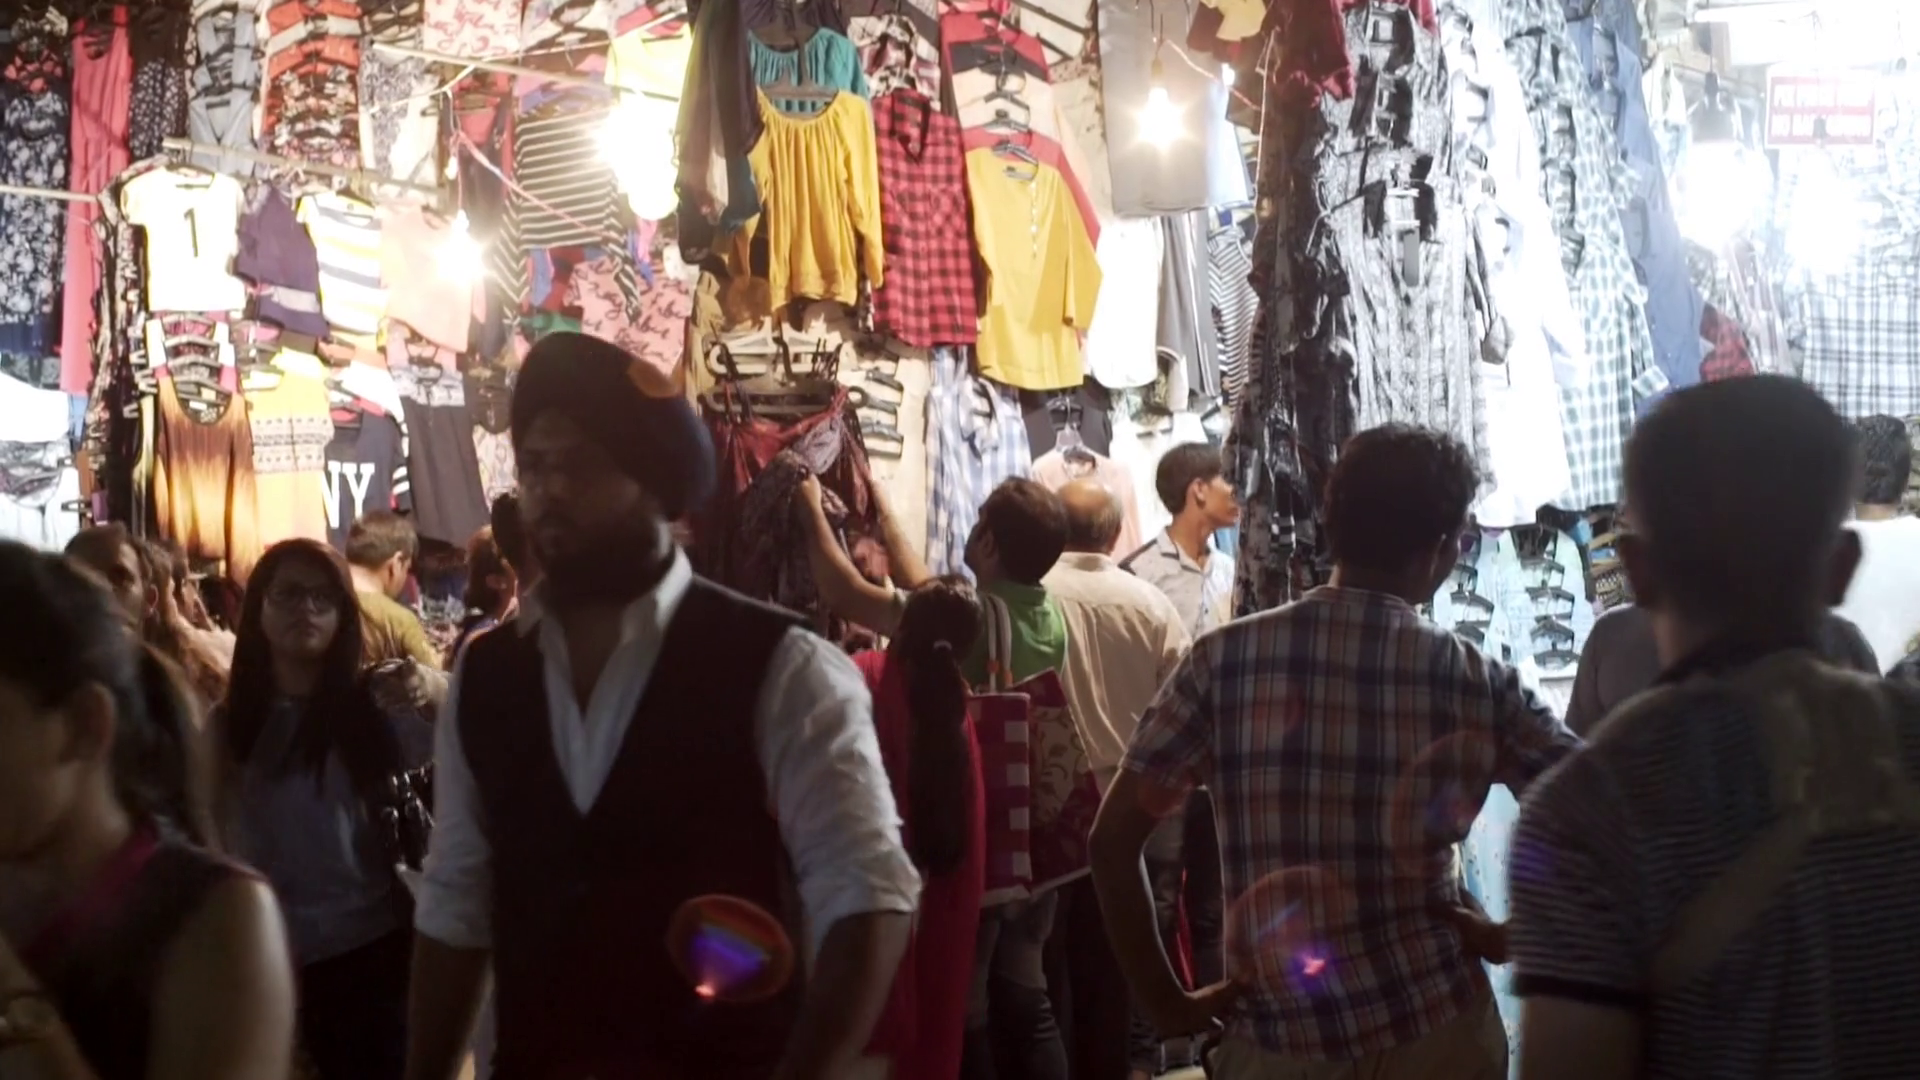 Crowd of people walk, shop clothes, bazaar market, nighttime, Delhi ...